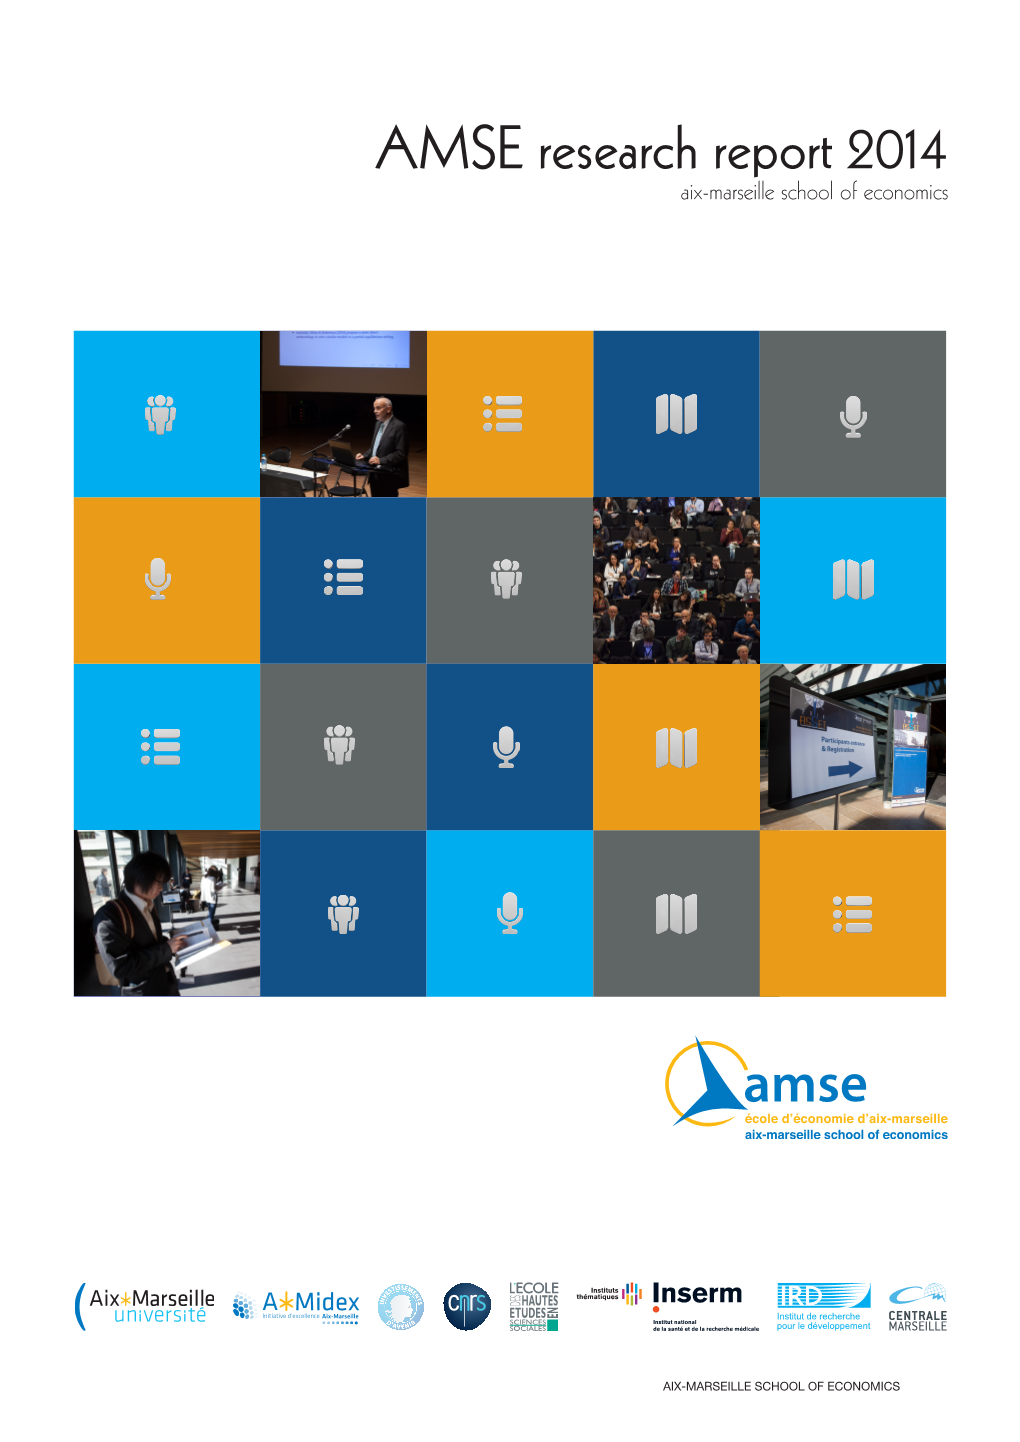 AMSE Research Report 2014 Aix-Marseille School of Economics